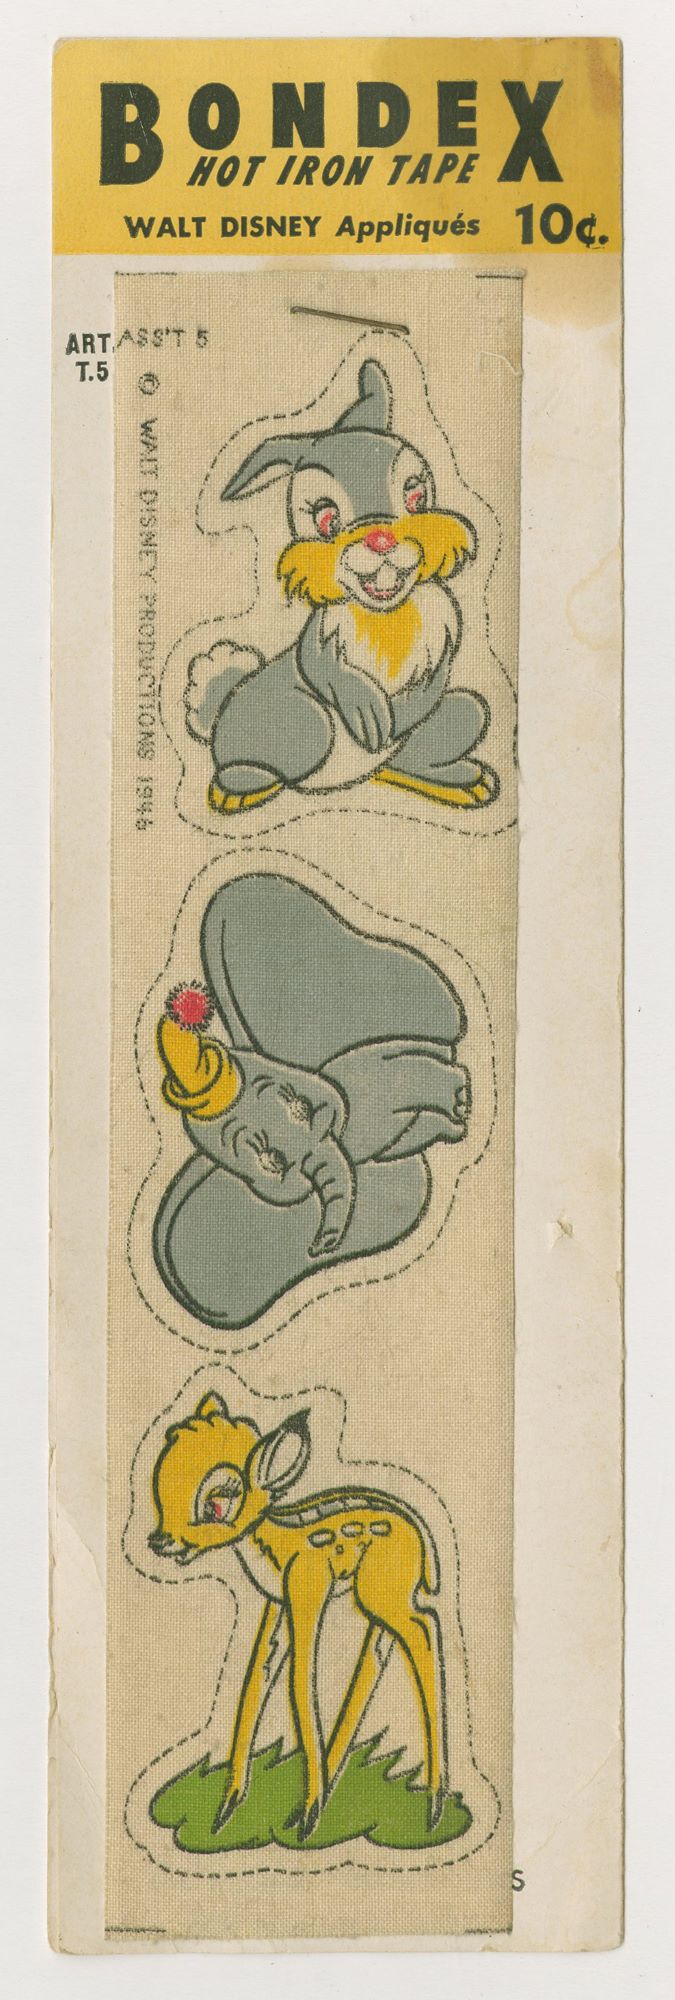 Disney Iron On Patches by Bondex (1946) - ID: mar23023